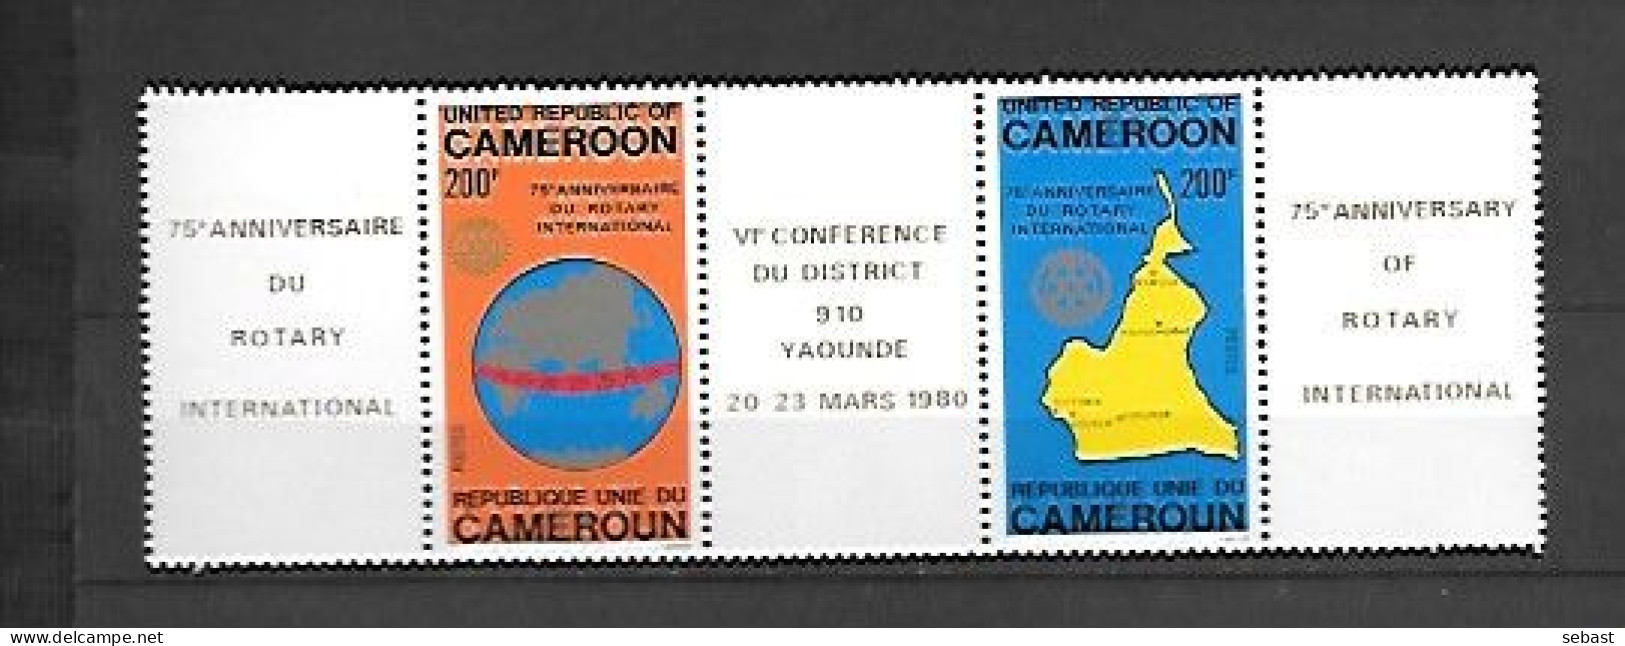 TIMBRE NEUF DU CAMEROUN DE 1980 N° MICHEL 925/26 - Cameroon (1960-...)